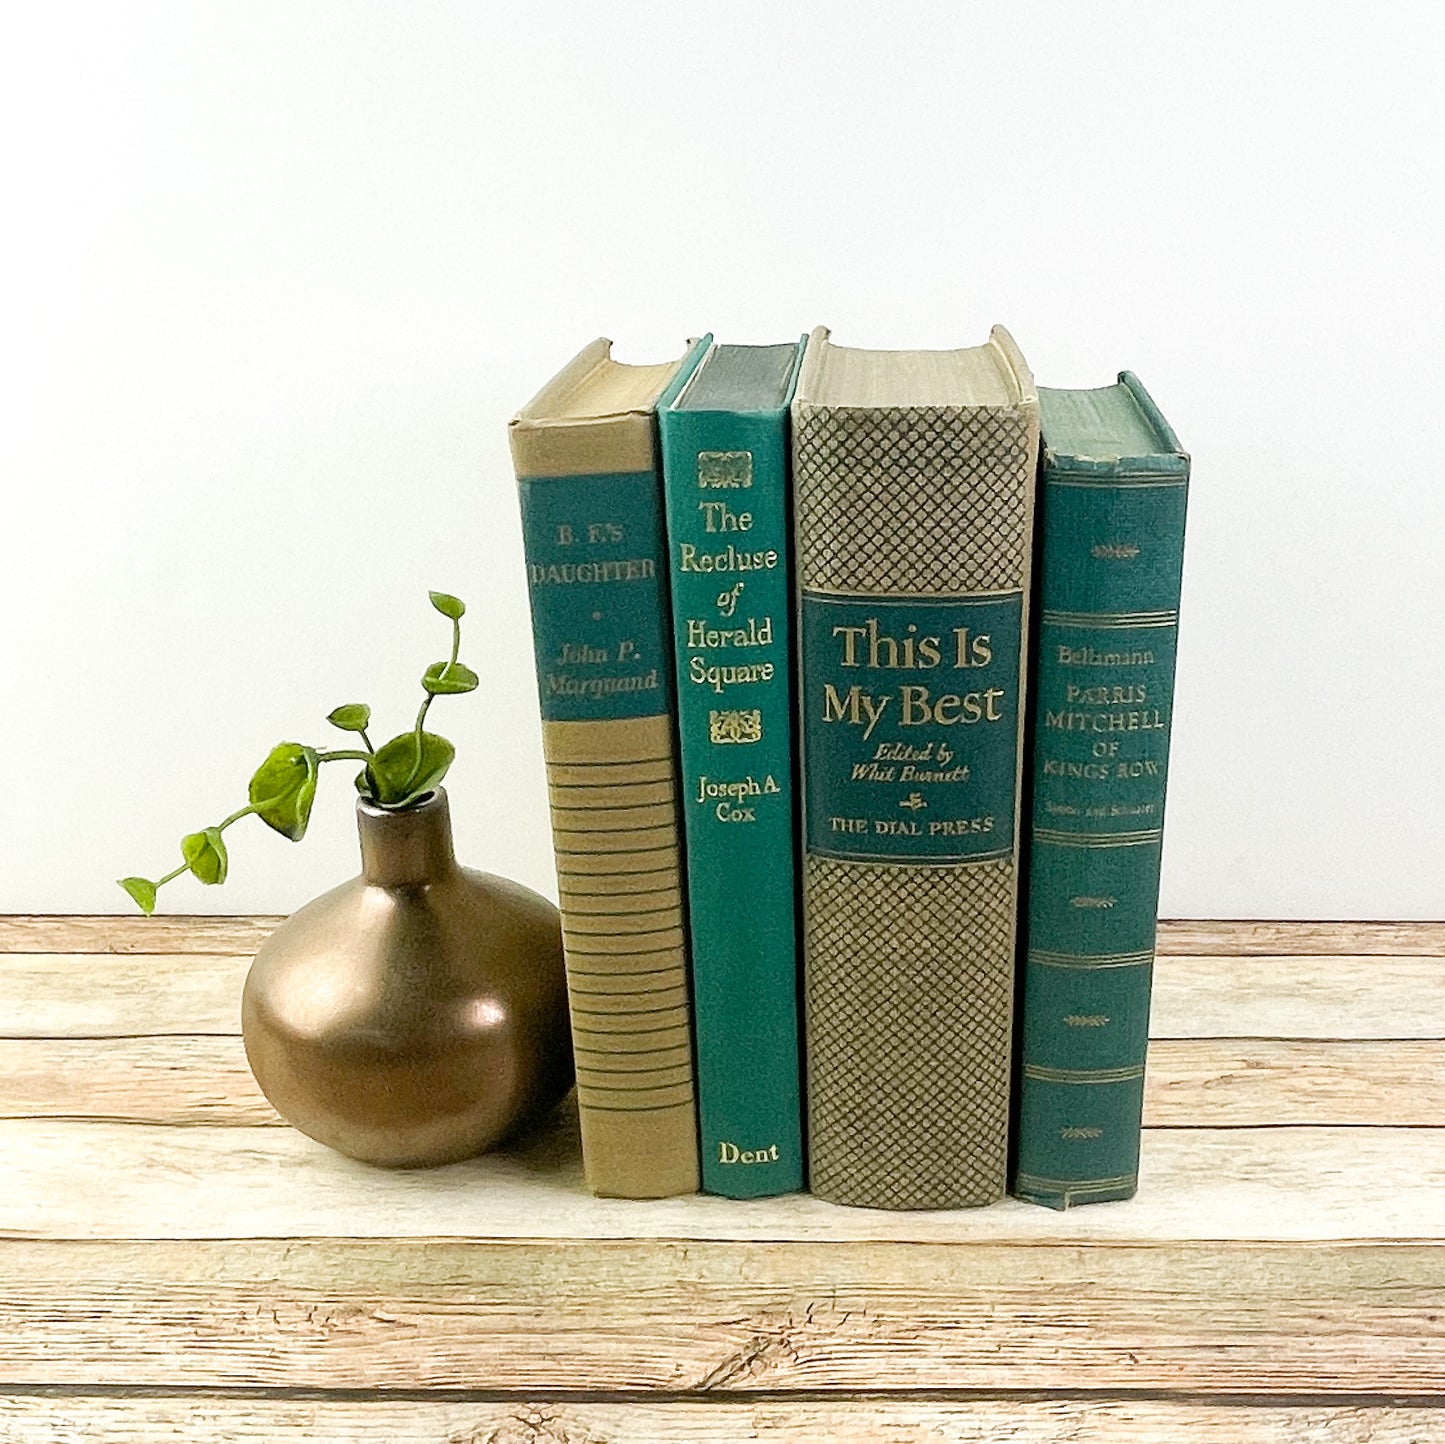 Classic Shelf Design with Green Books